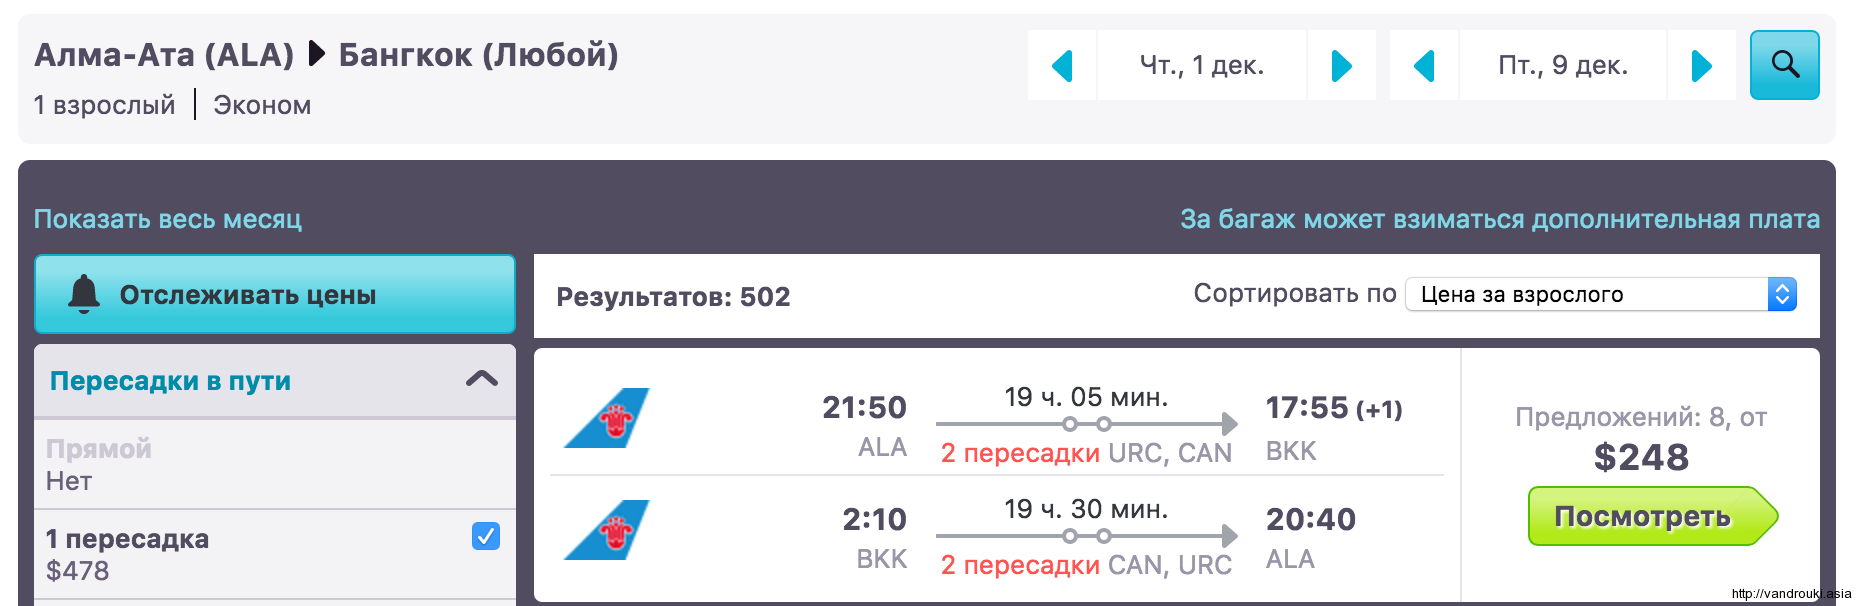 Киев екатеринбург авиабилет аэропорт благовещенск билеты на самолет